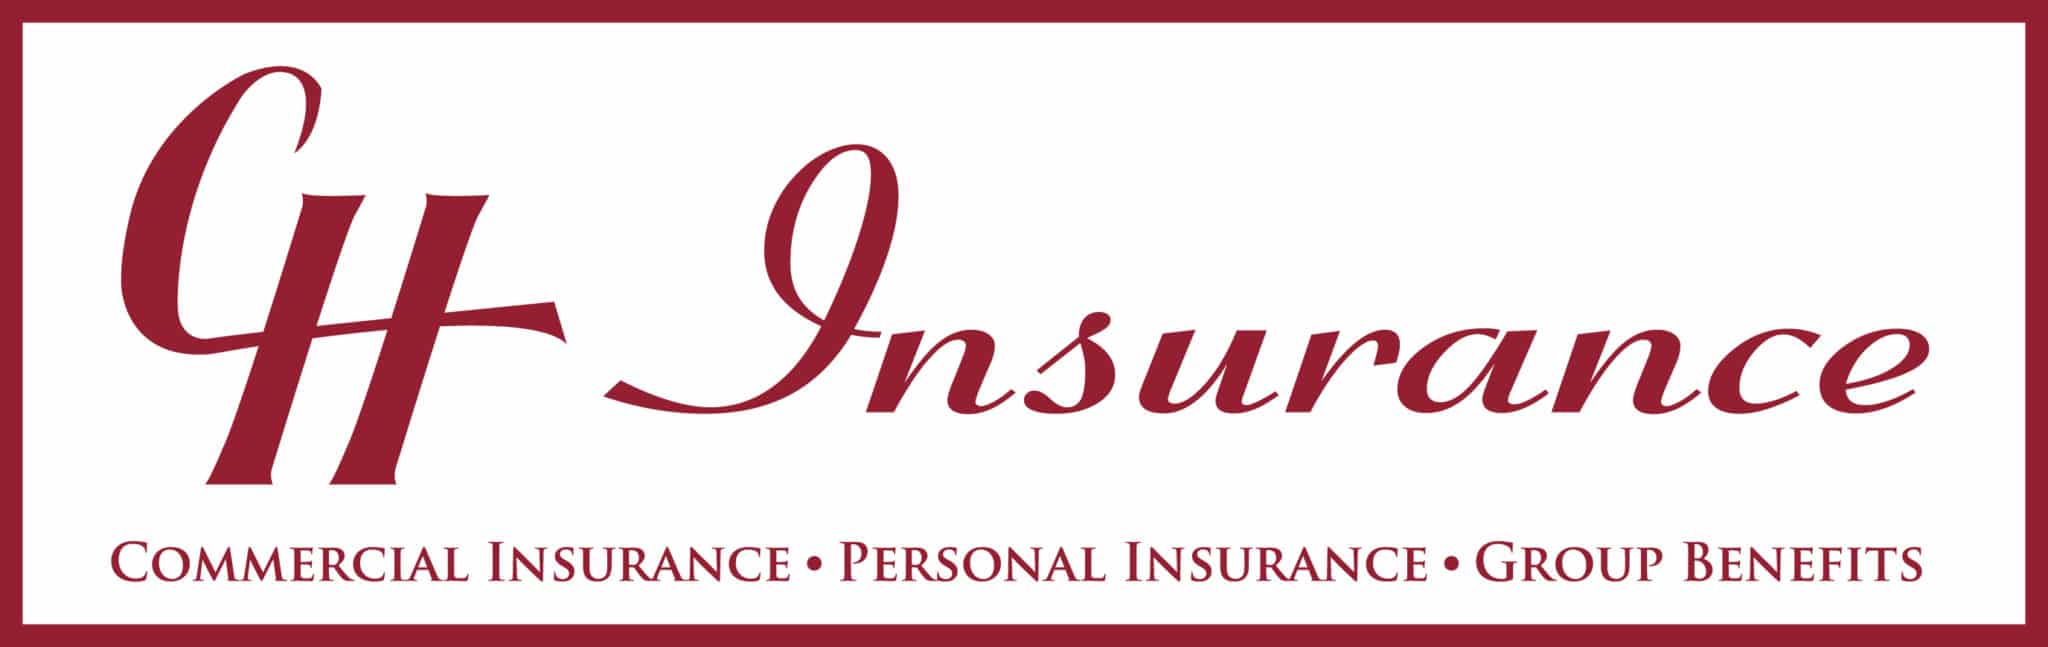 ch insurance